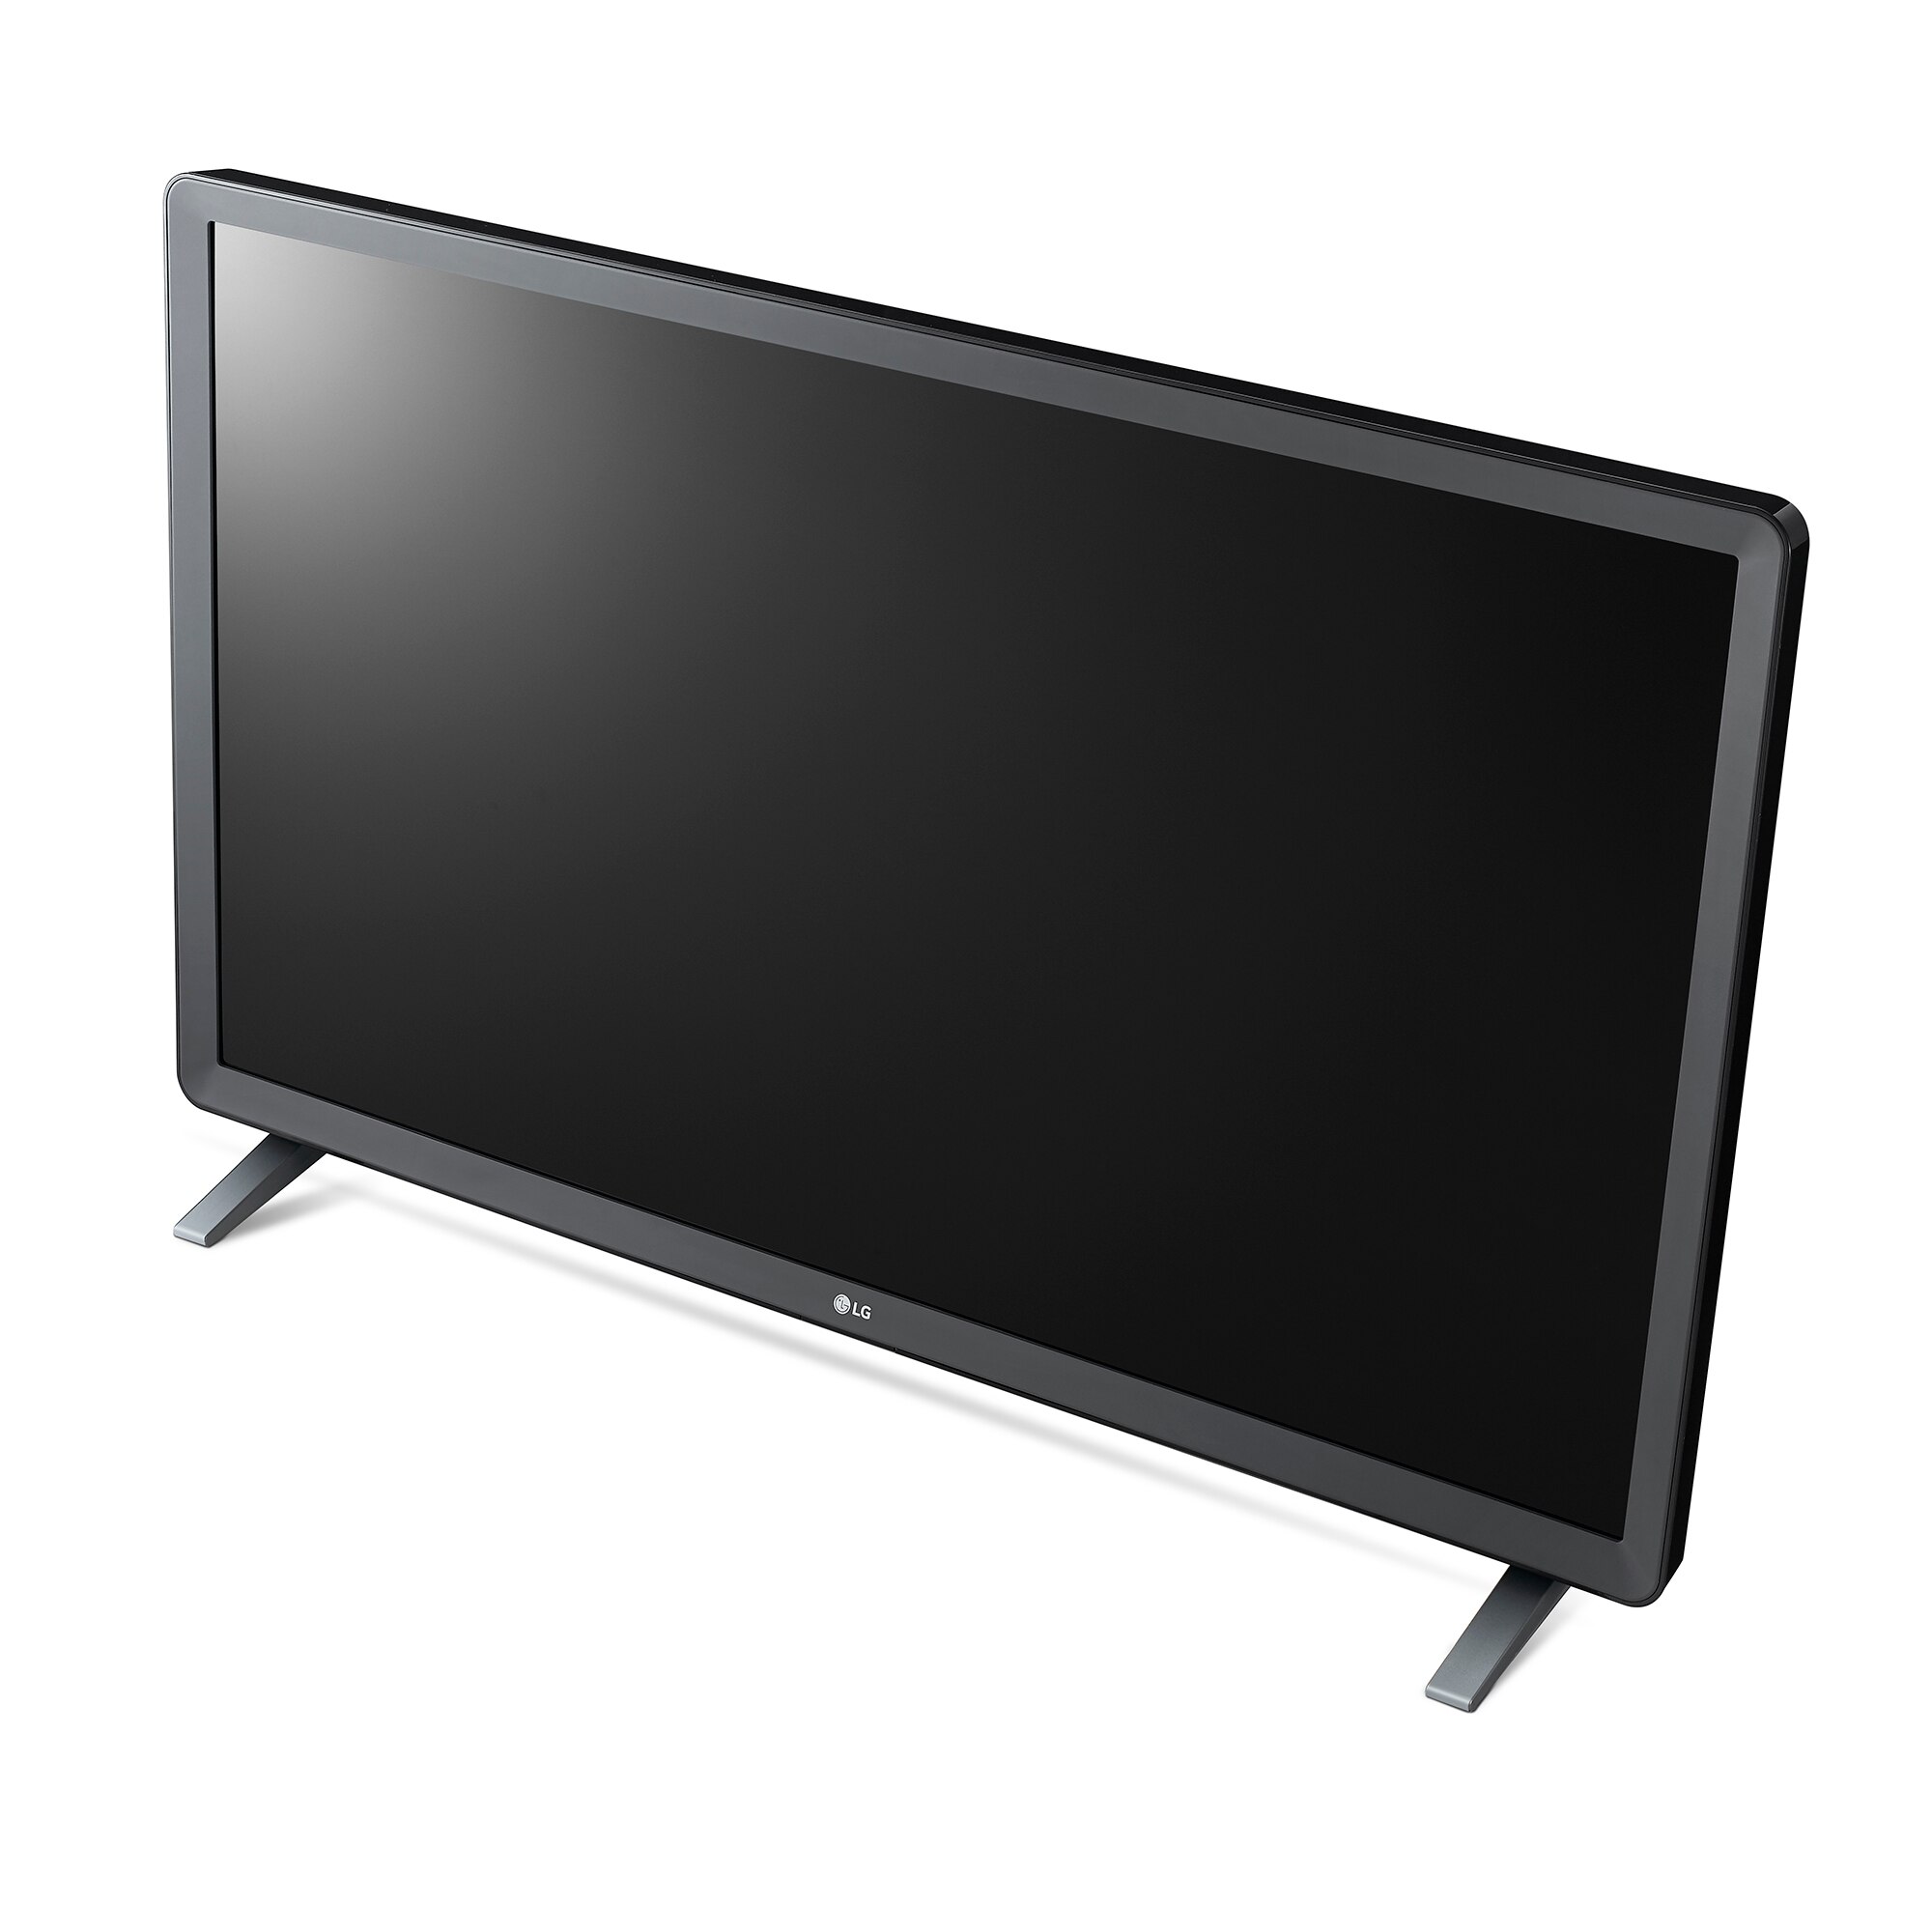 Телевизор lg 32 см. Телевизор LG 32lj600u. LG Smart TV 32 lj600u. LG 32lj600u 2017 led. Телевизор LG 47lb652v 47".